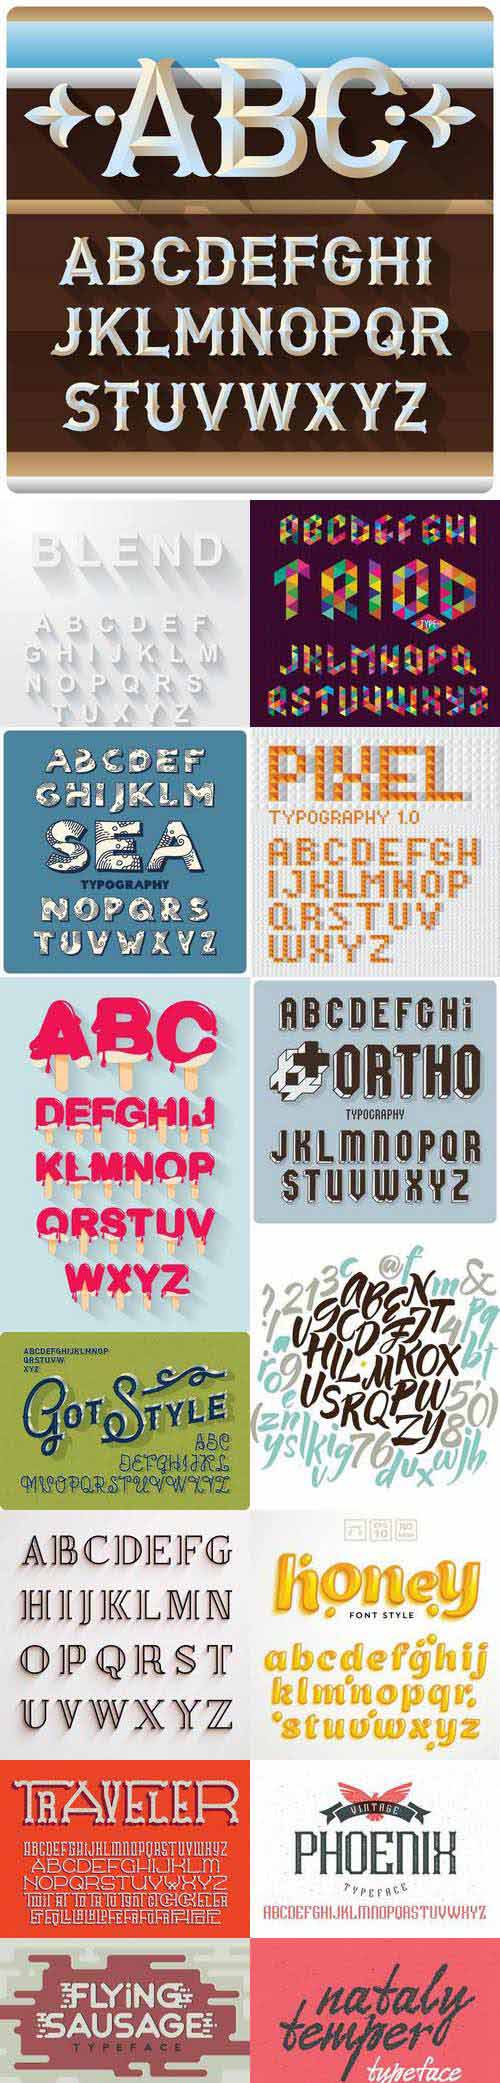 Typeface Illustration Vector Set